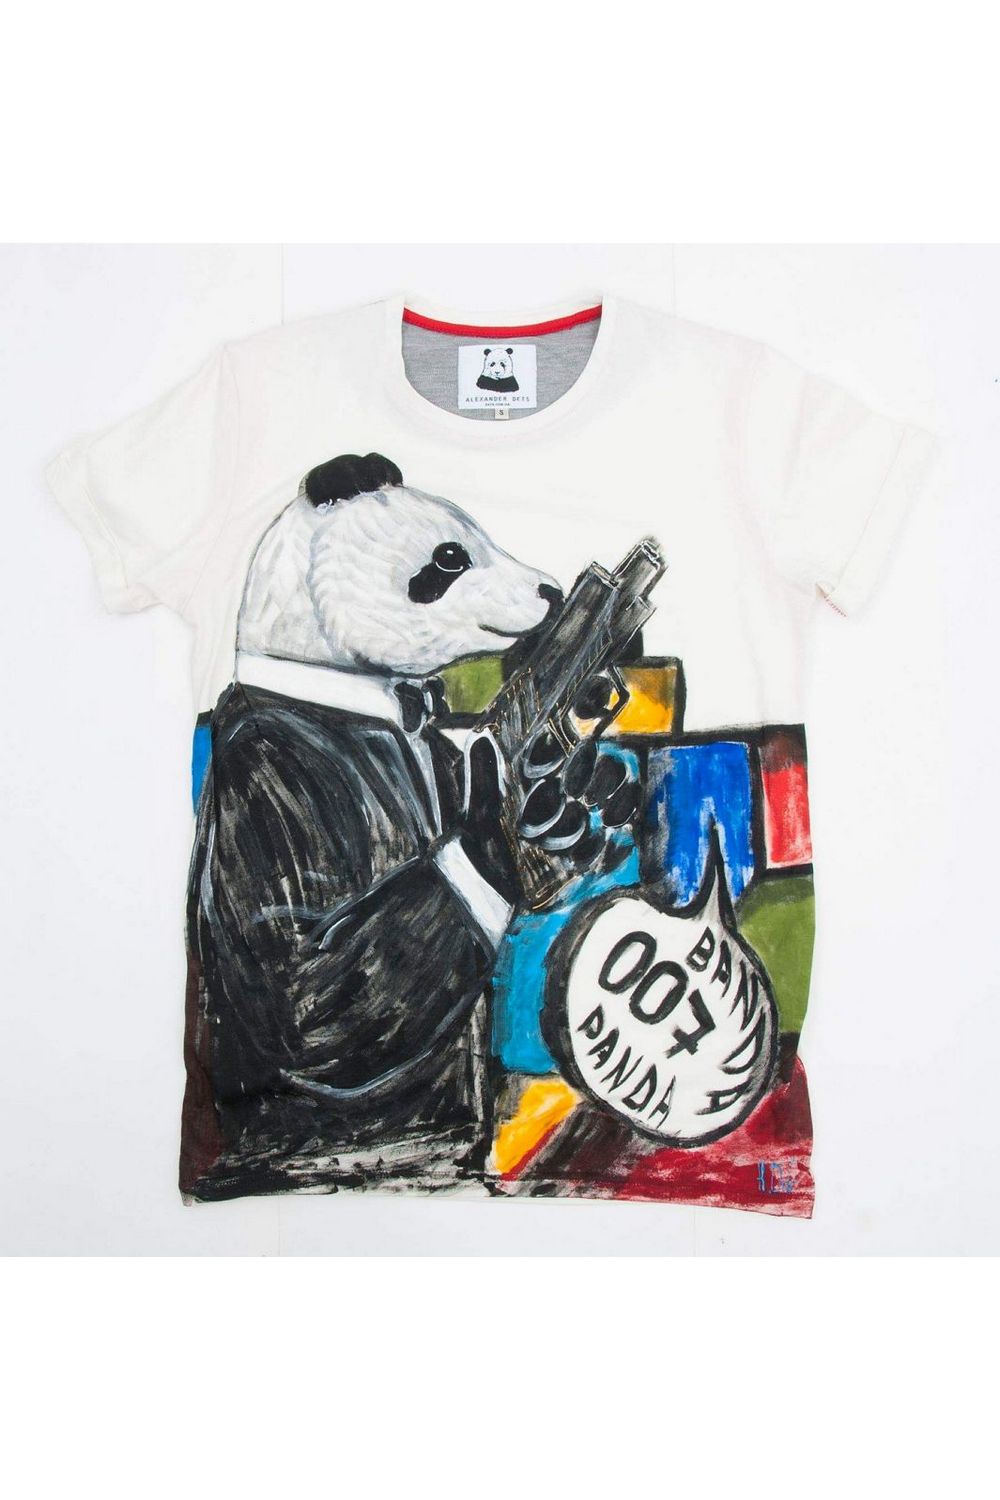 Buy Men Women Funny Gray Cotton Print tee shirt , Short sleeve Panda tshirt, Unique stylish t shirt